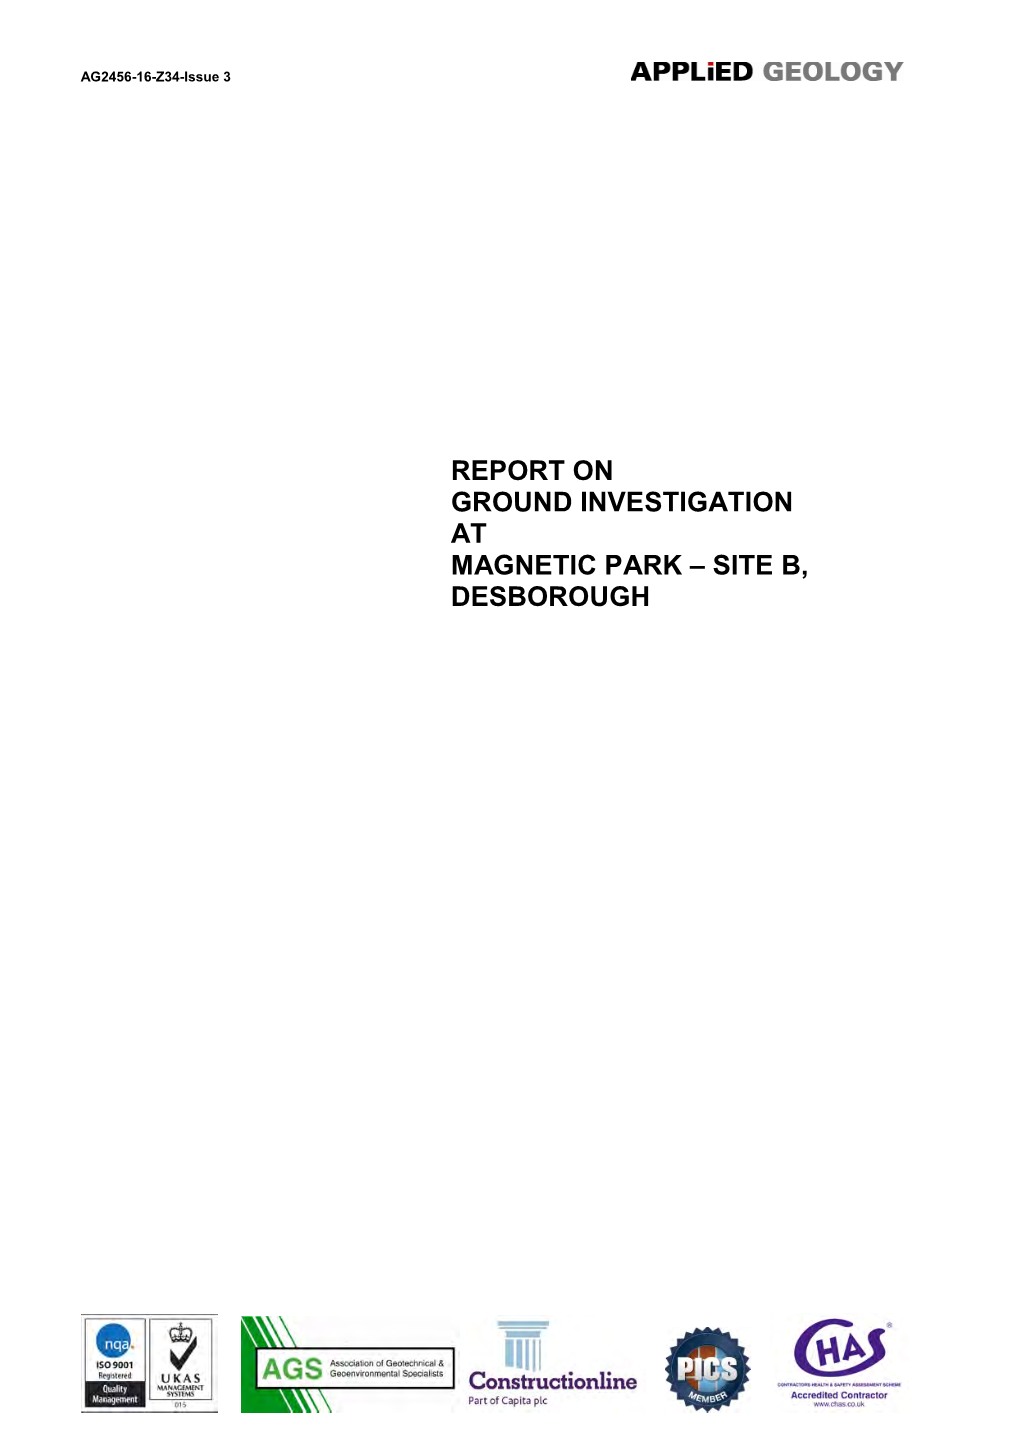 Report on Ground Investigation at Magnetic Park – Site B, Desborough